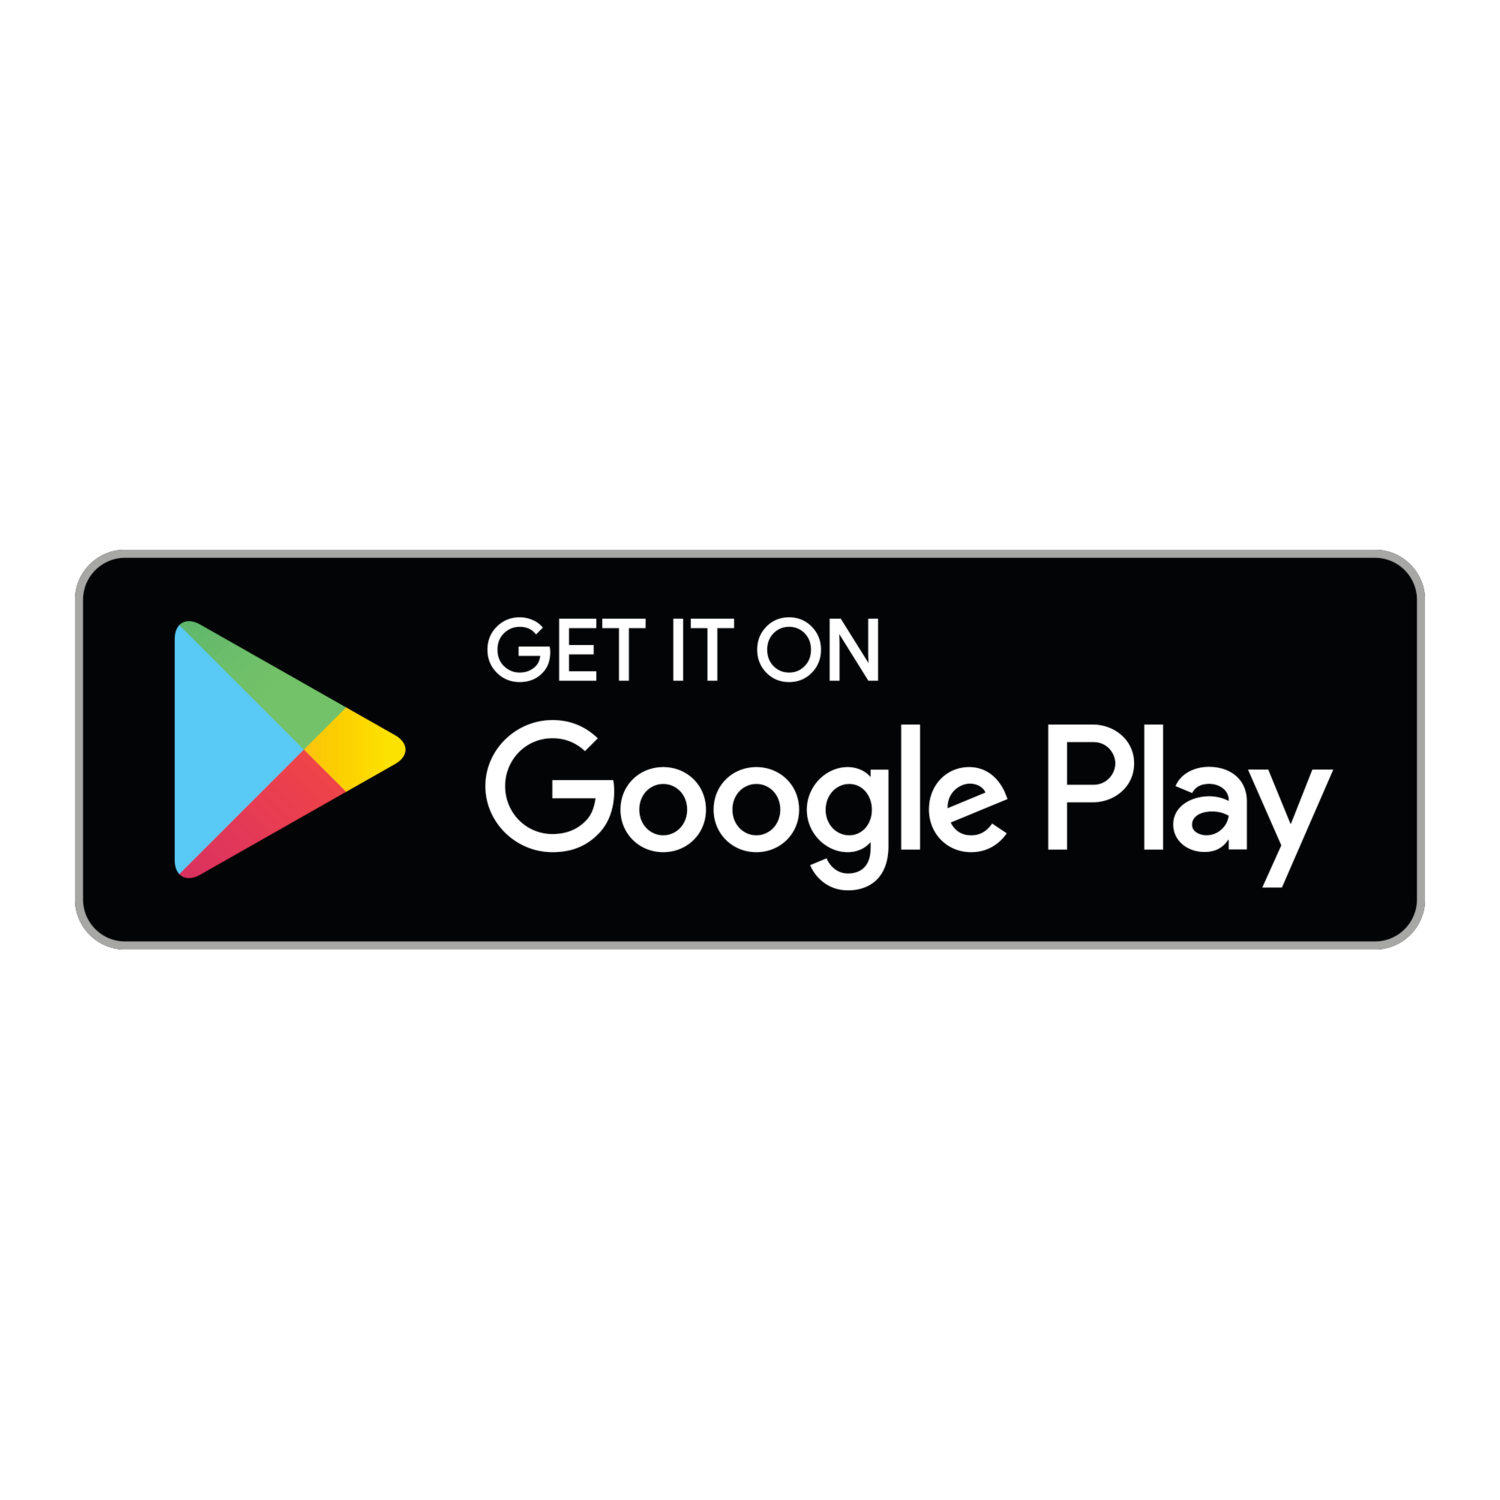 Google Play store indir